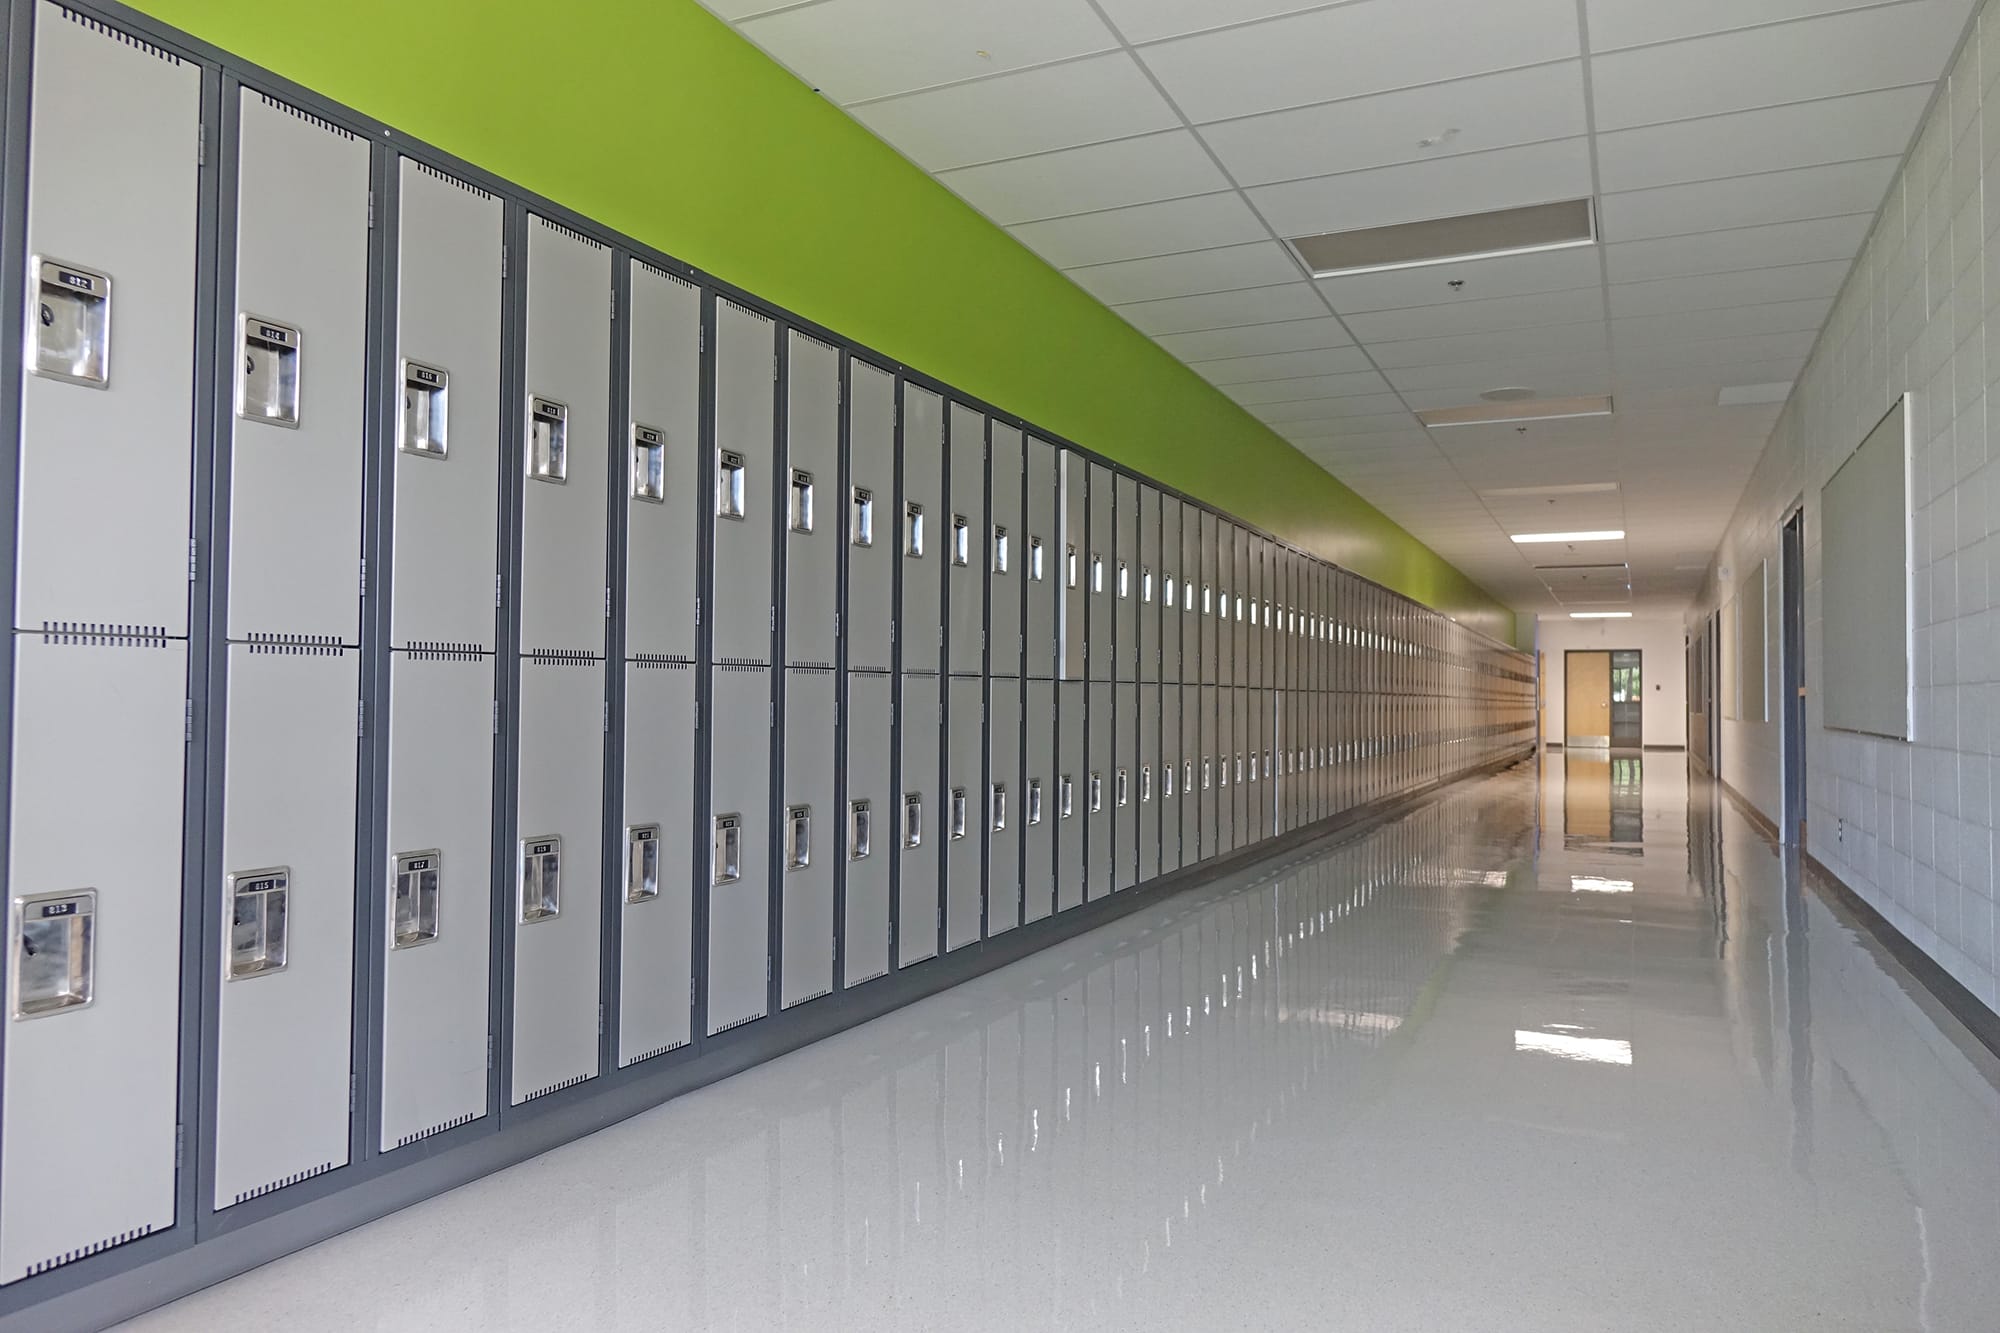 École Montrose Junior High School interior hallway and lockers